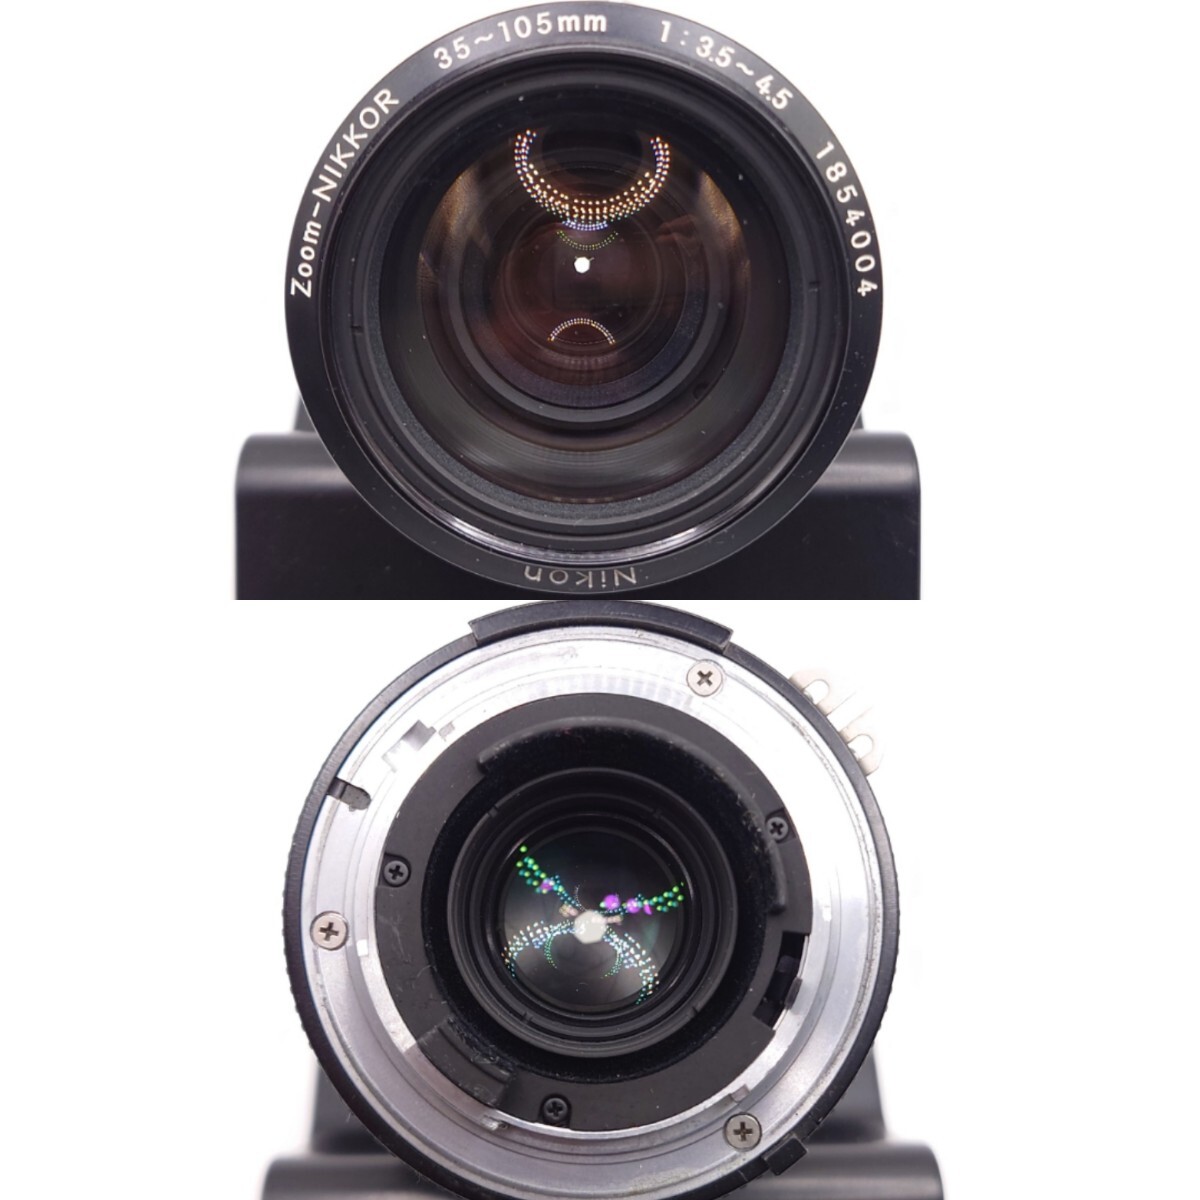 【R1-428】 Nikon F2 フォトミック シルバー ボディ フィルム 一眼レフ カメラZOOM NIKKOR 35-105mm 1:3.5-4.5 シャッター動作OK_画像7